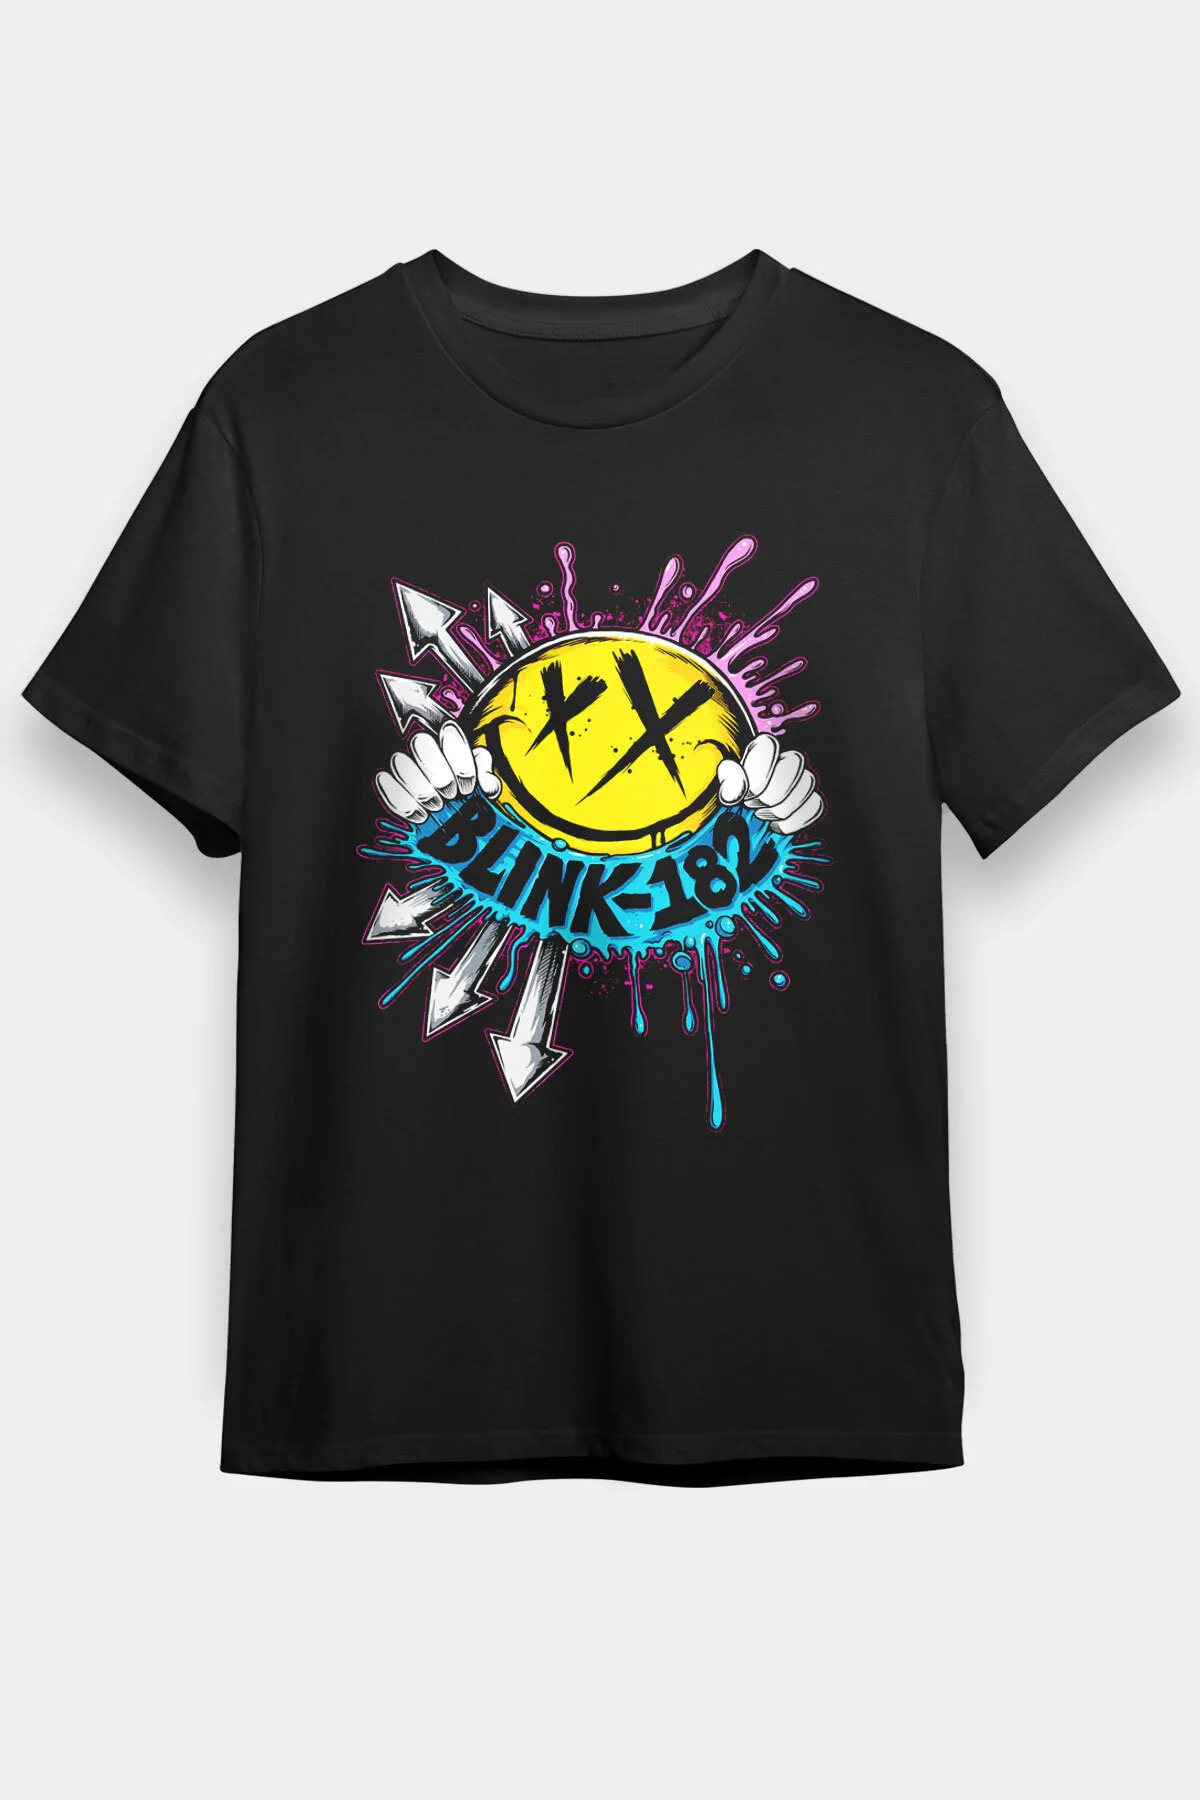 Blink 182 , Music Band ,Unisex Tshirt 23/